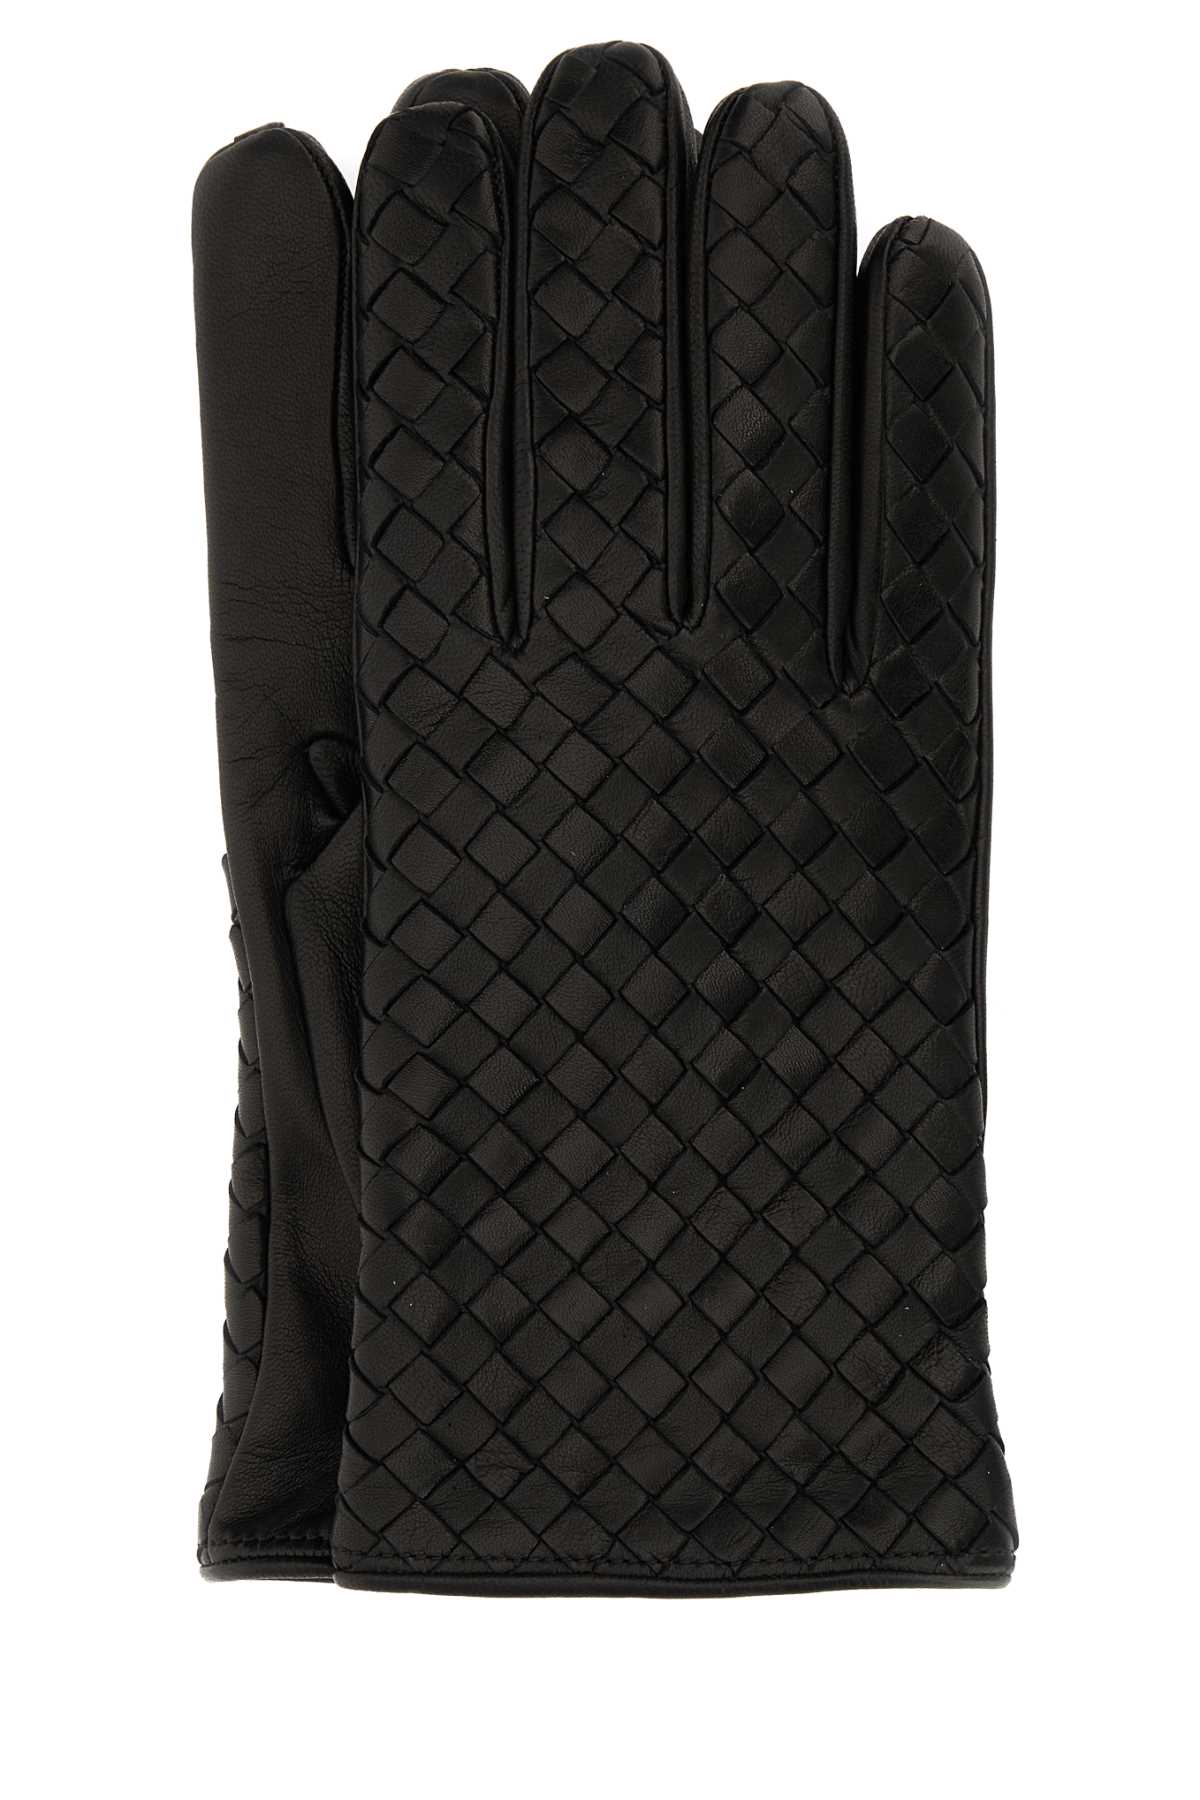 Bottega Veneta Black Nappa Leather Gloves